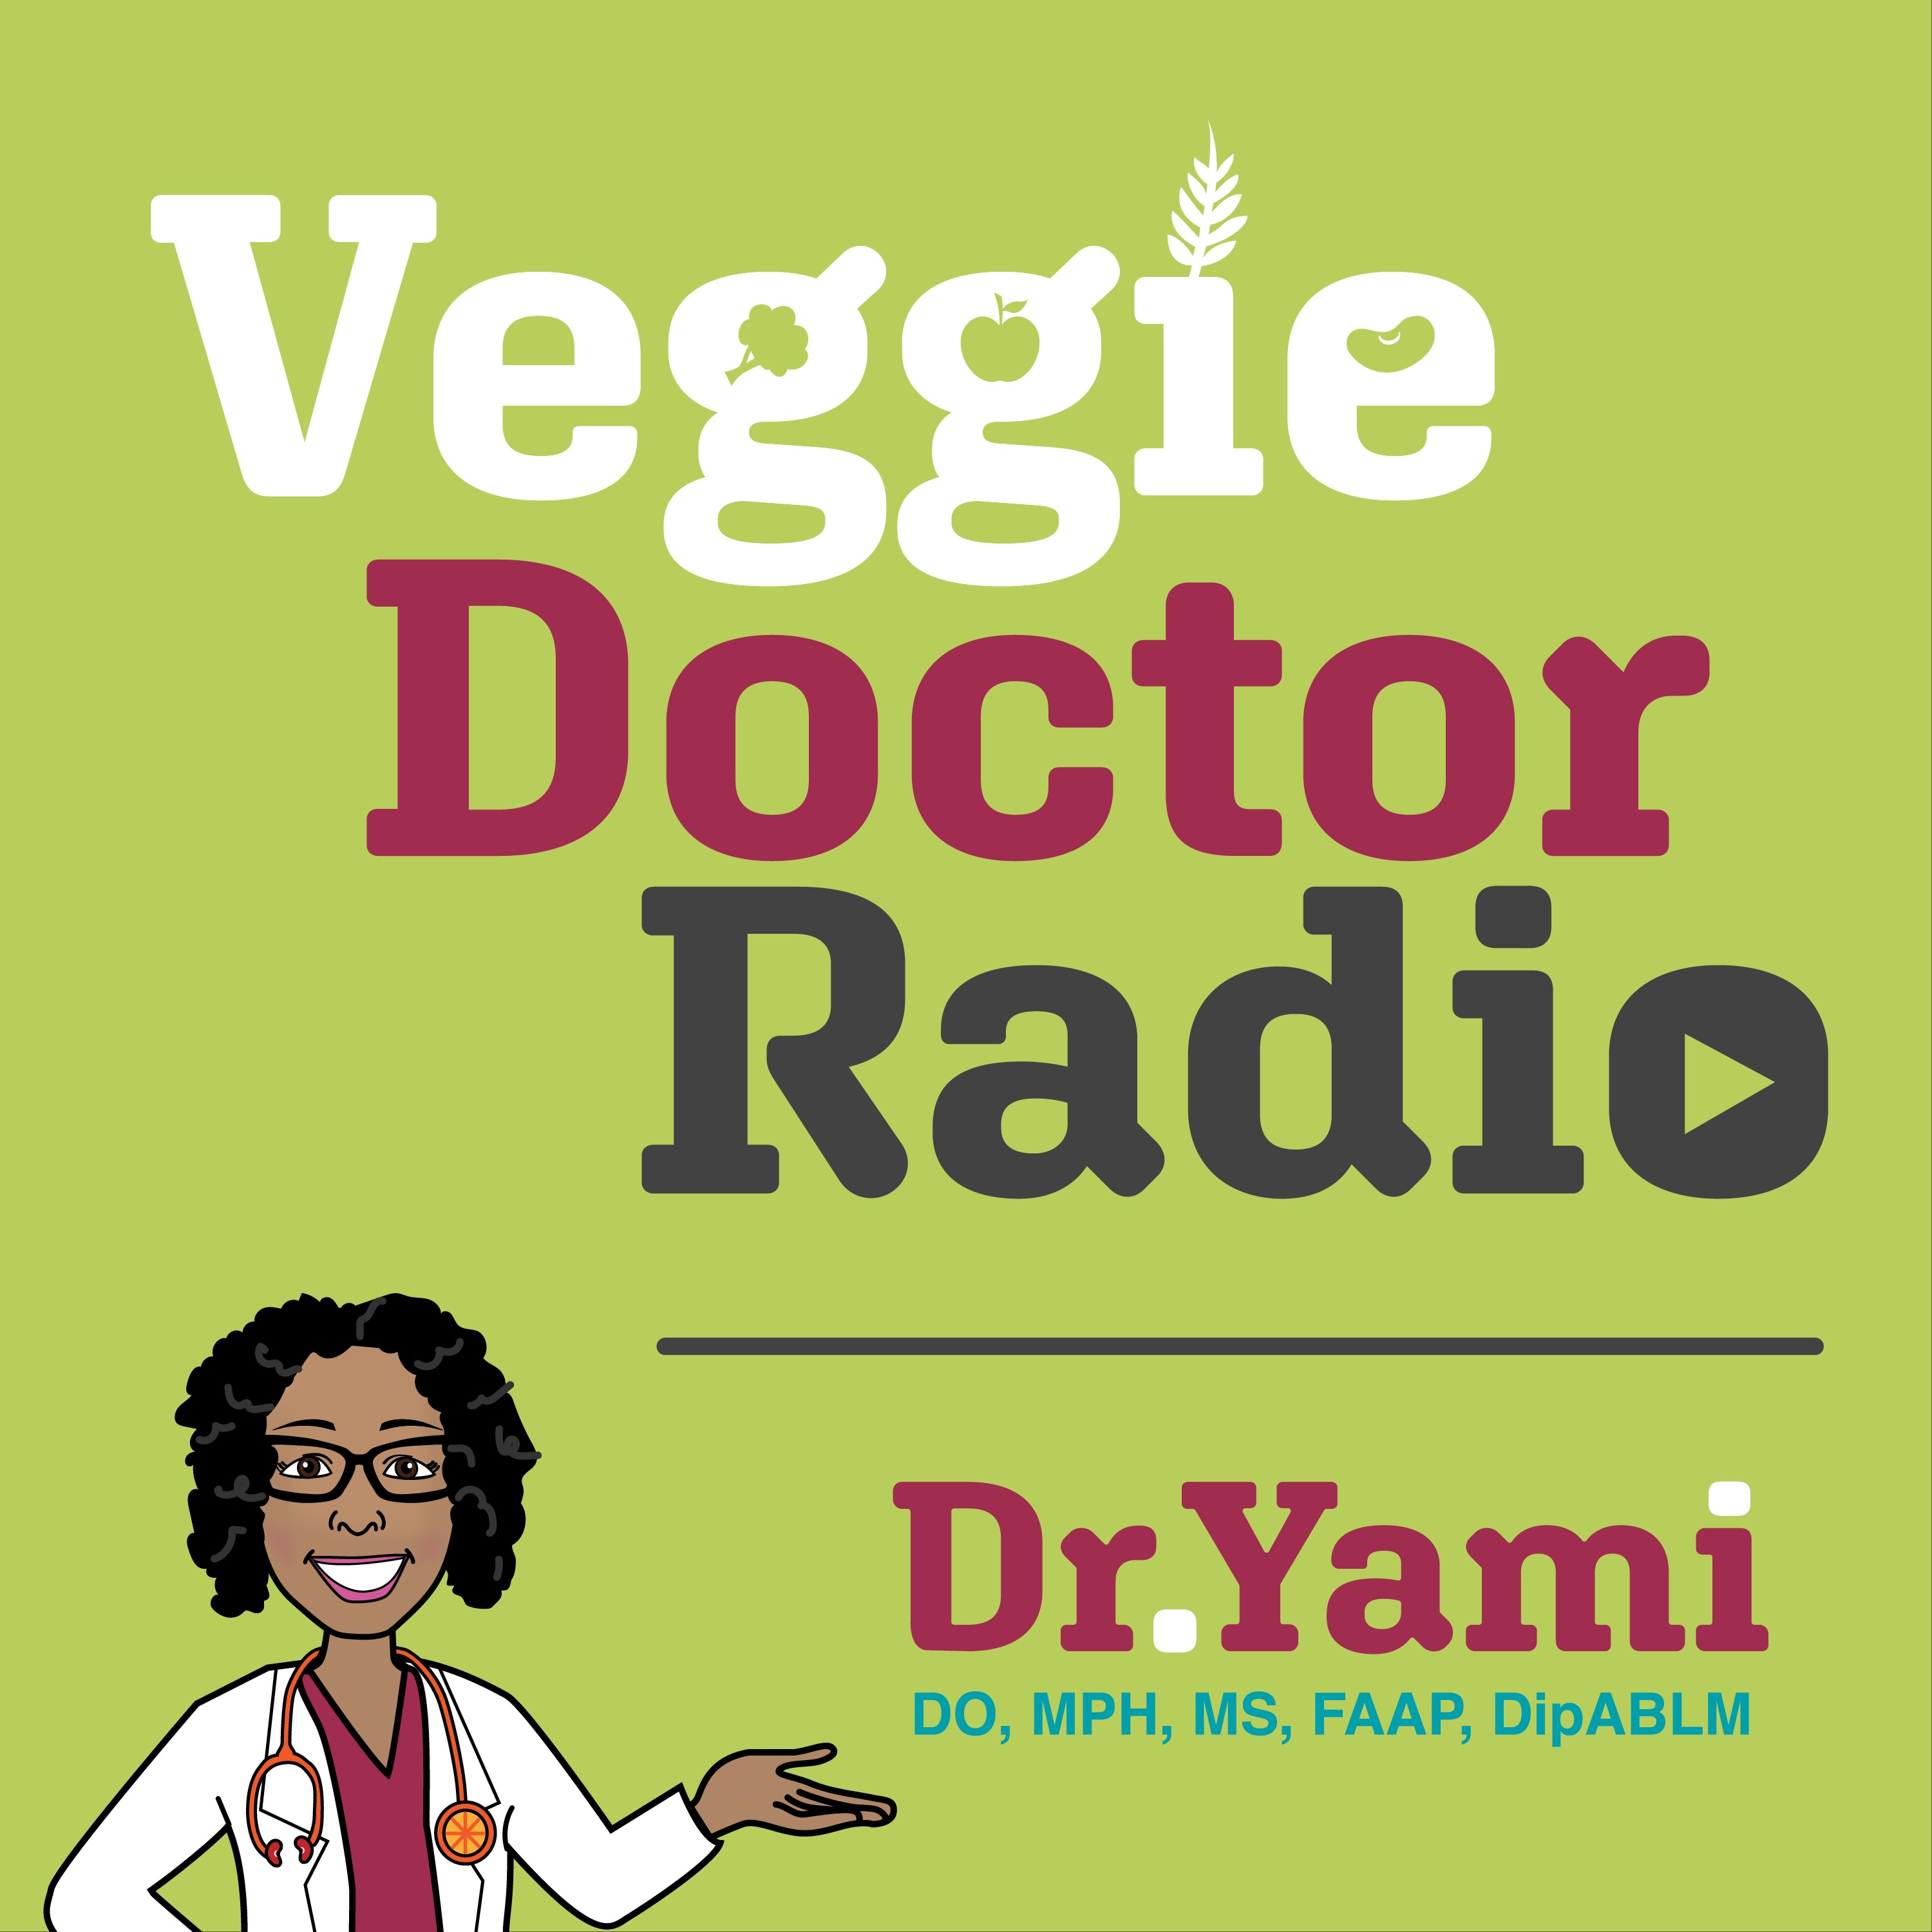 140: Teaching Children the Foundation of Wellbeing (Veggie Doctor Radio)